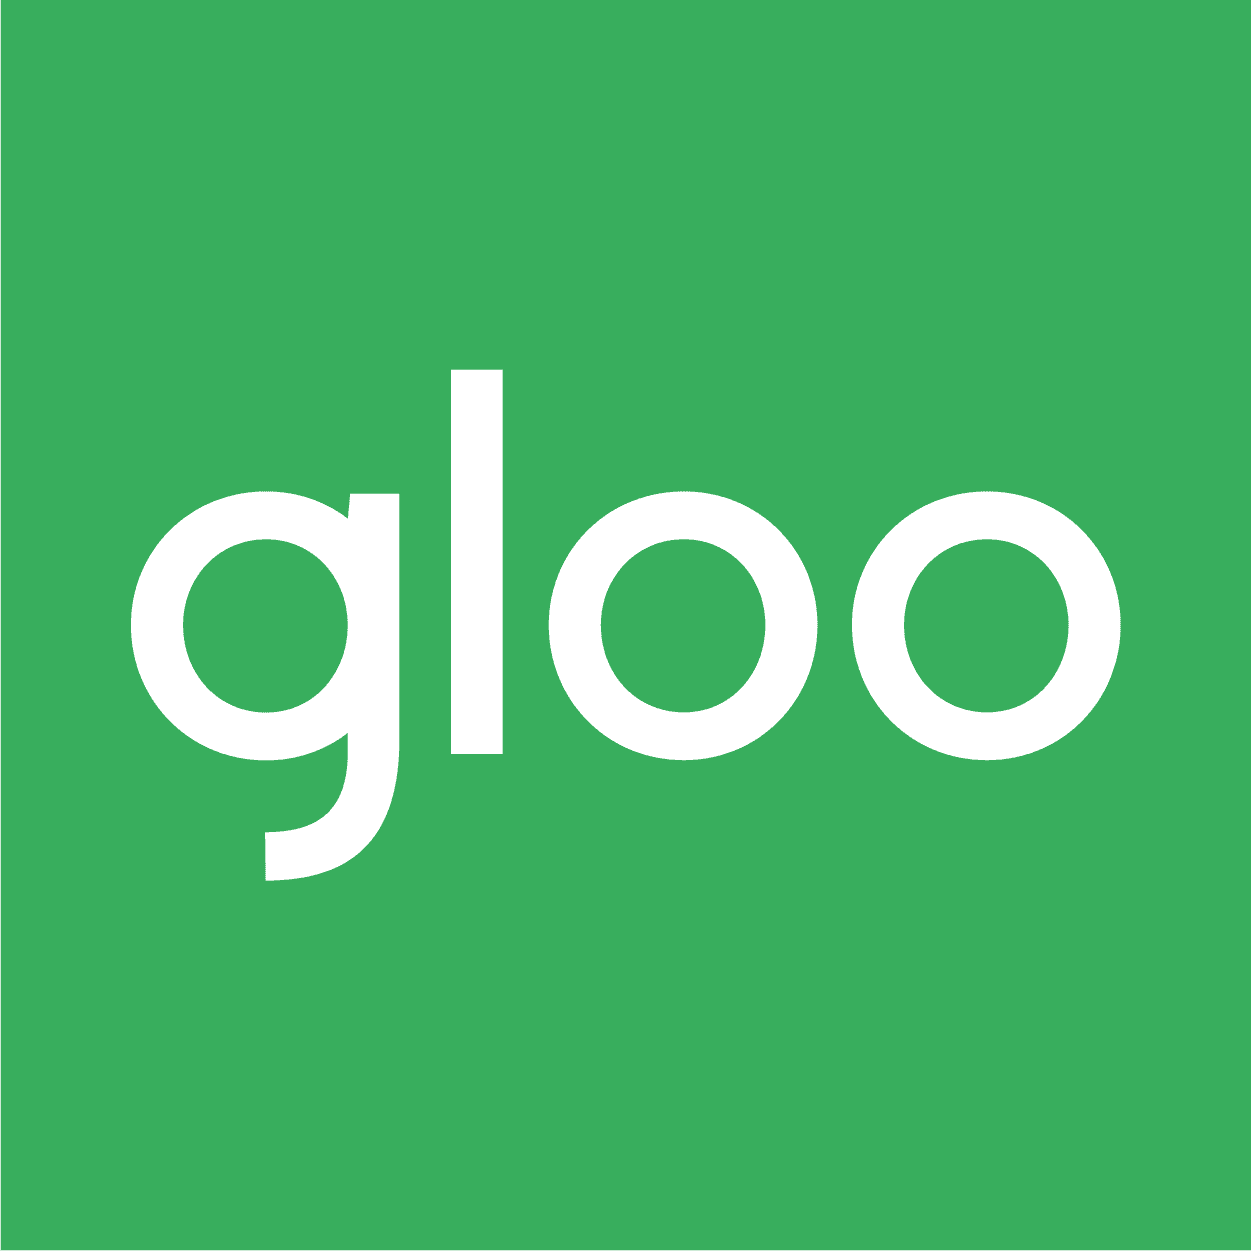 Gloo标志